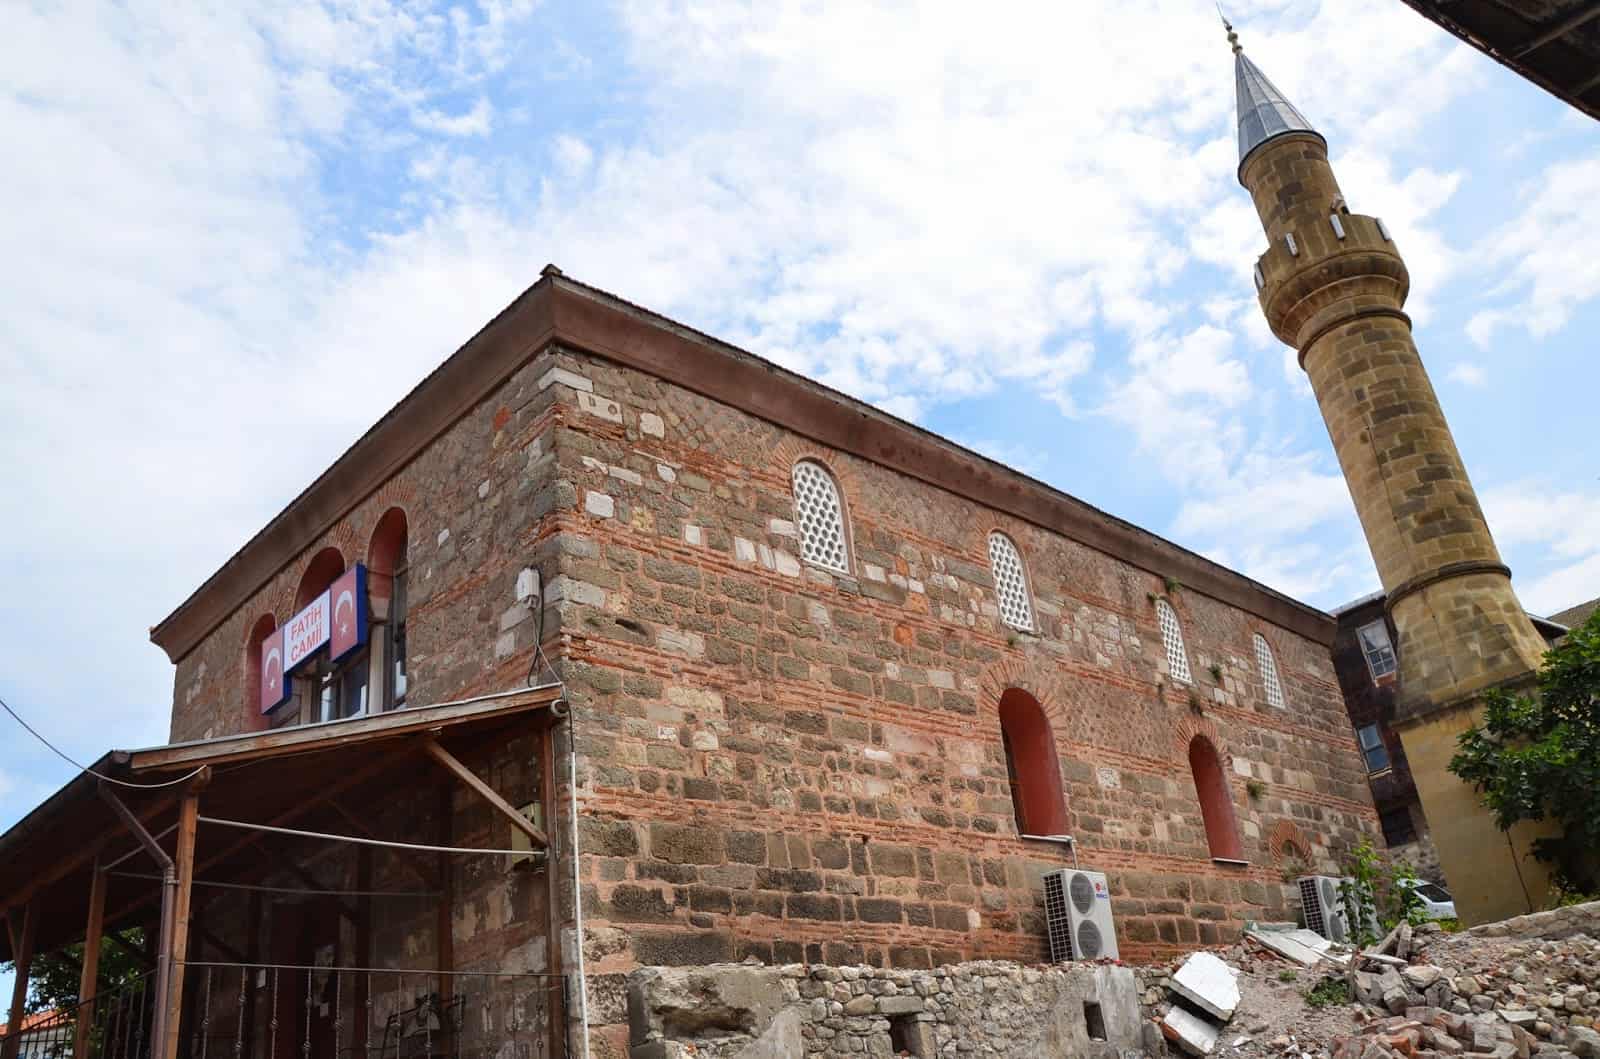 Fatih Mosque in Amasra, Turkey